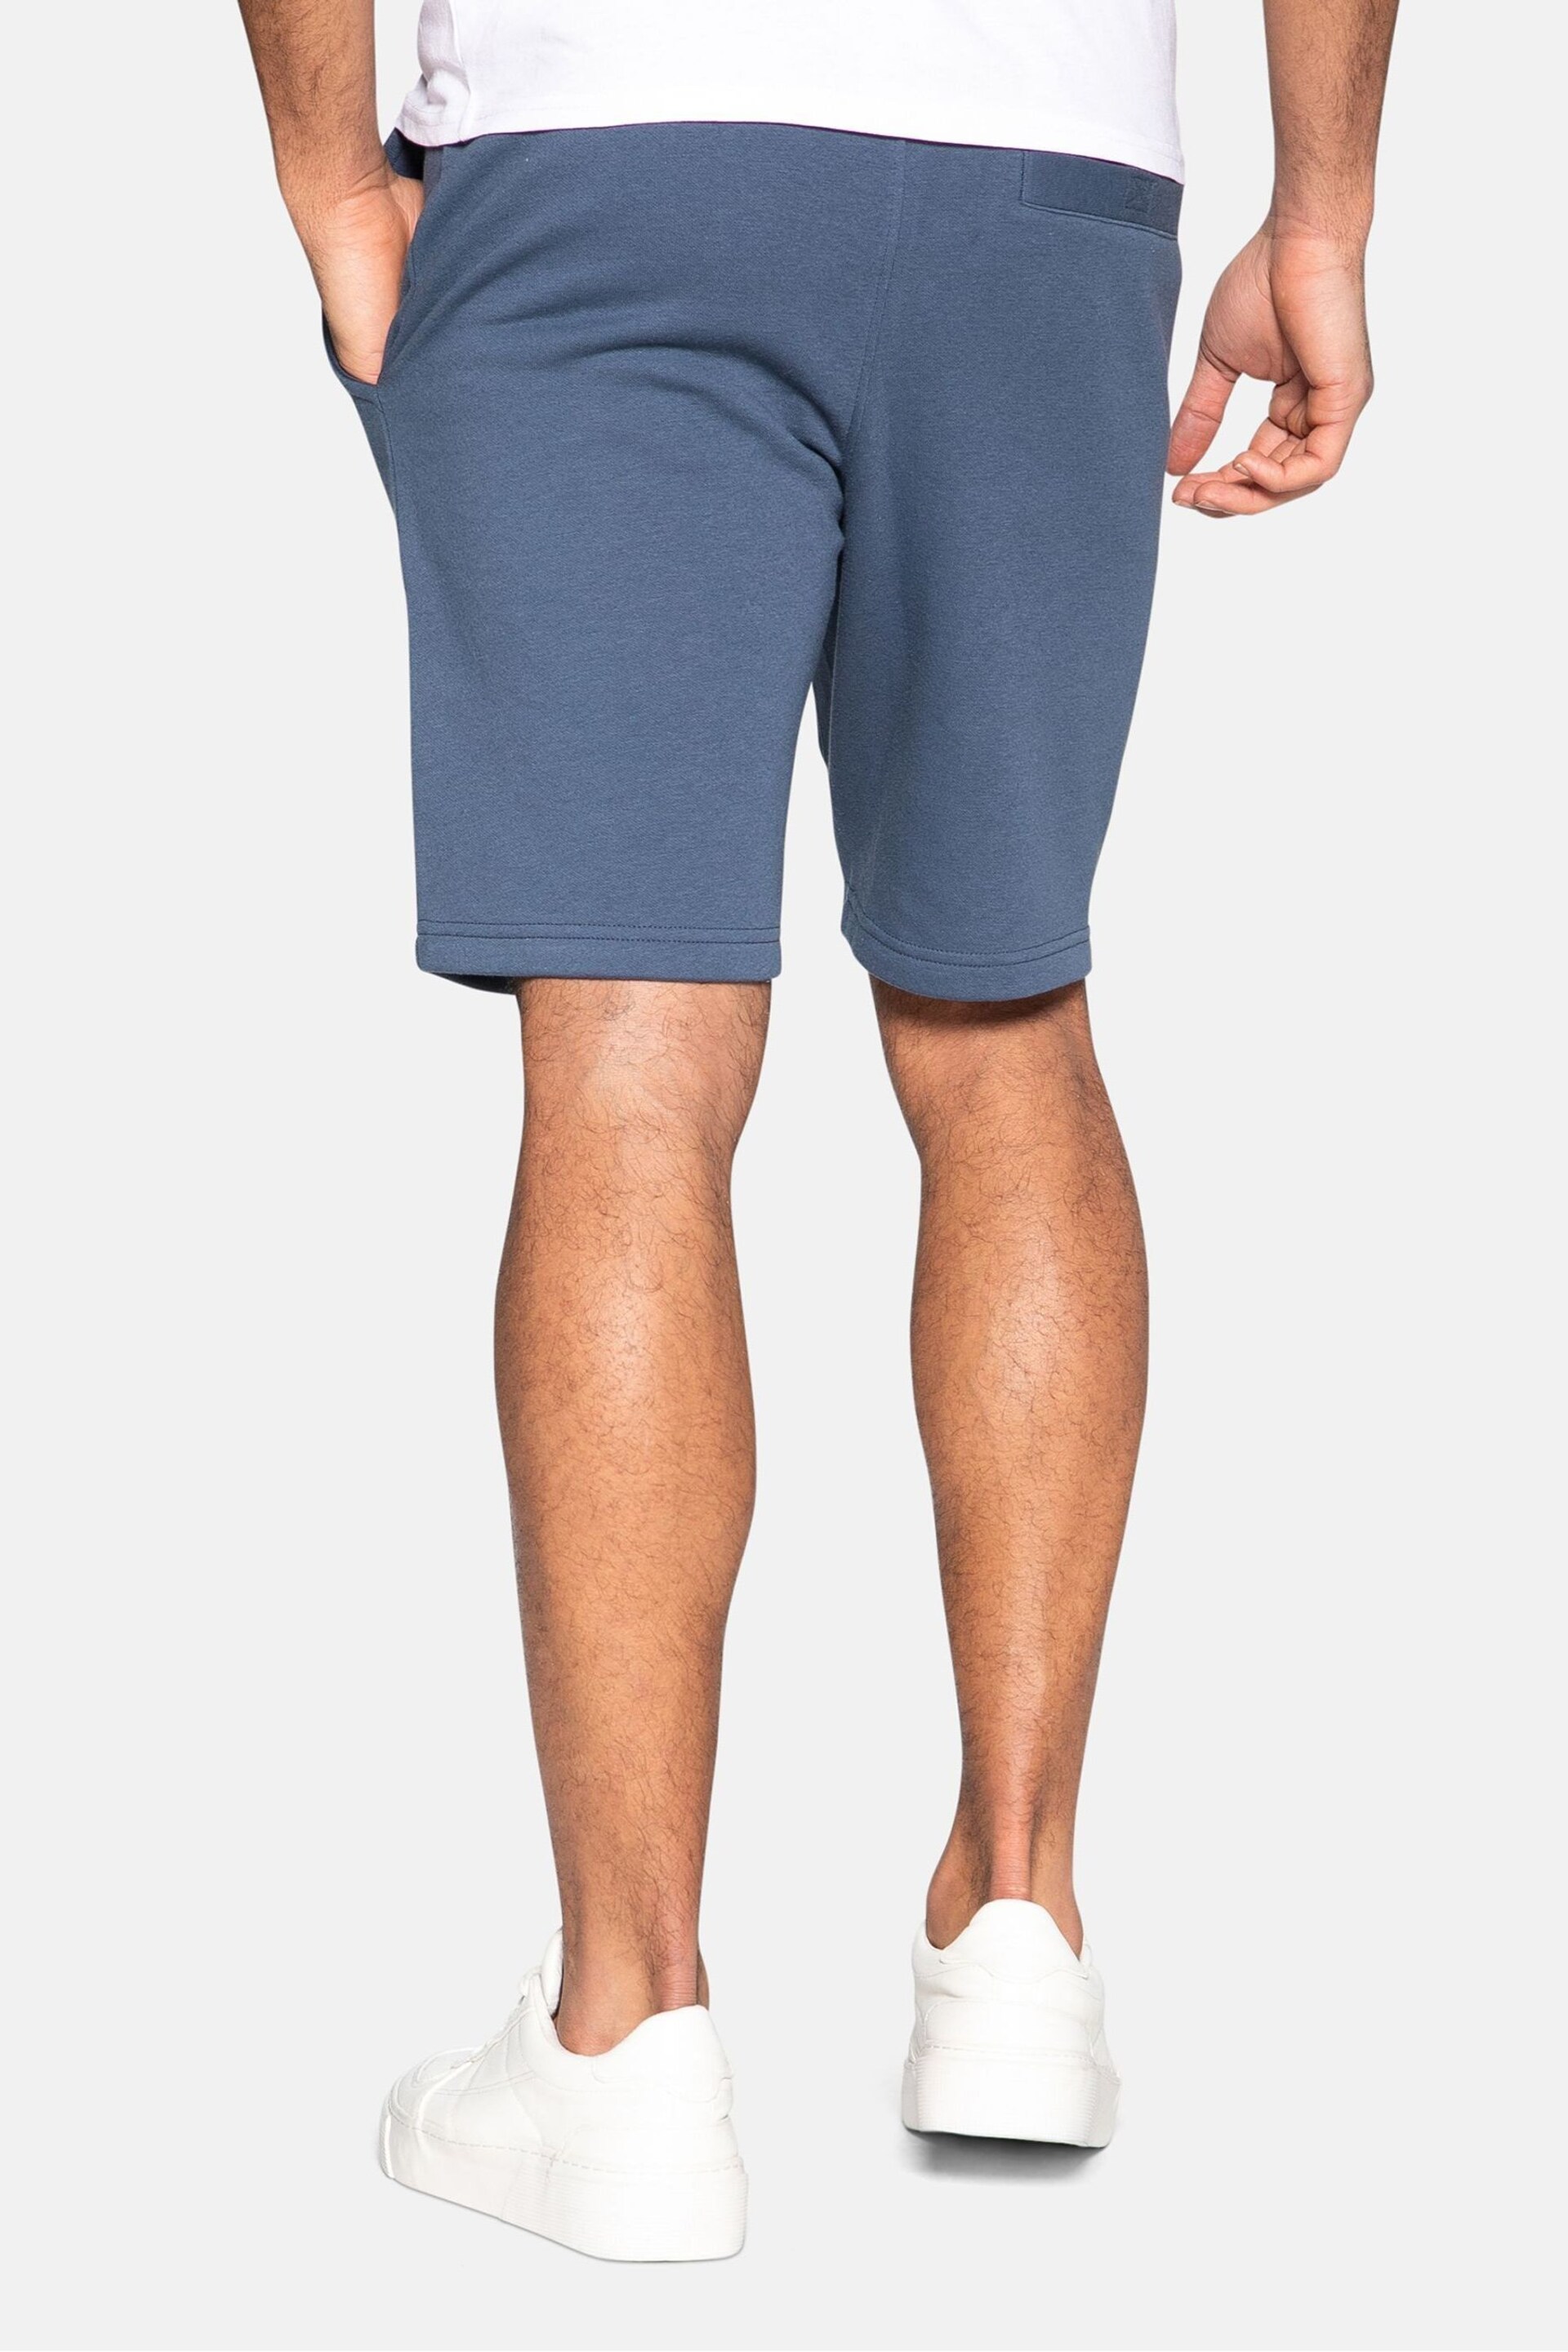 Threadbare Blue Basic Fleece Shorts - Image 2 of 4